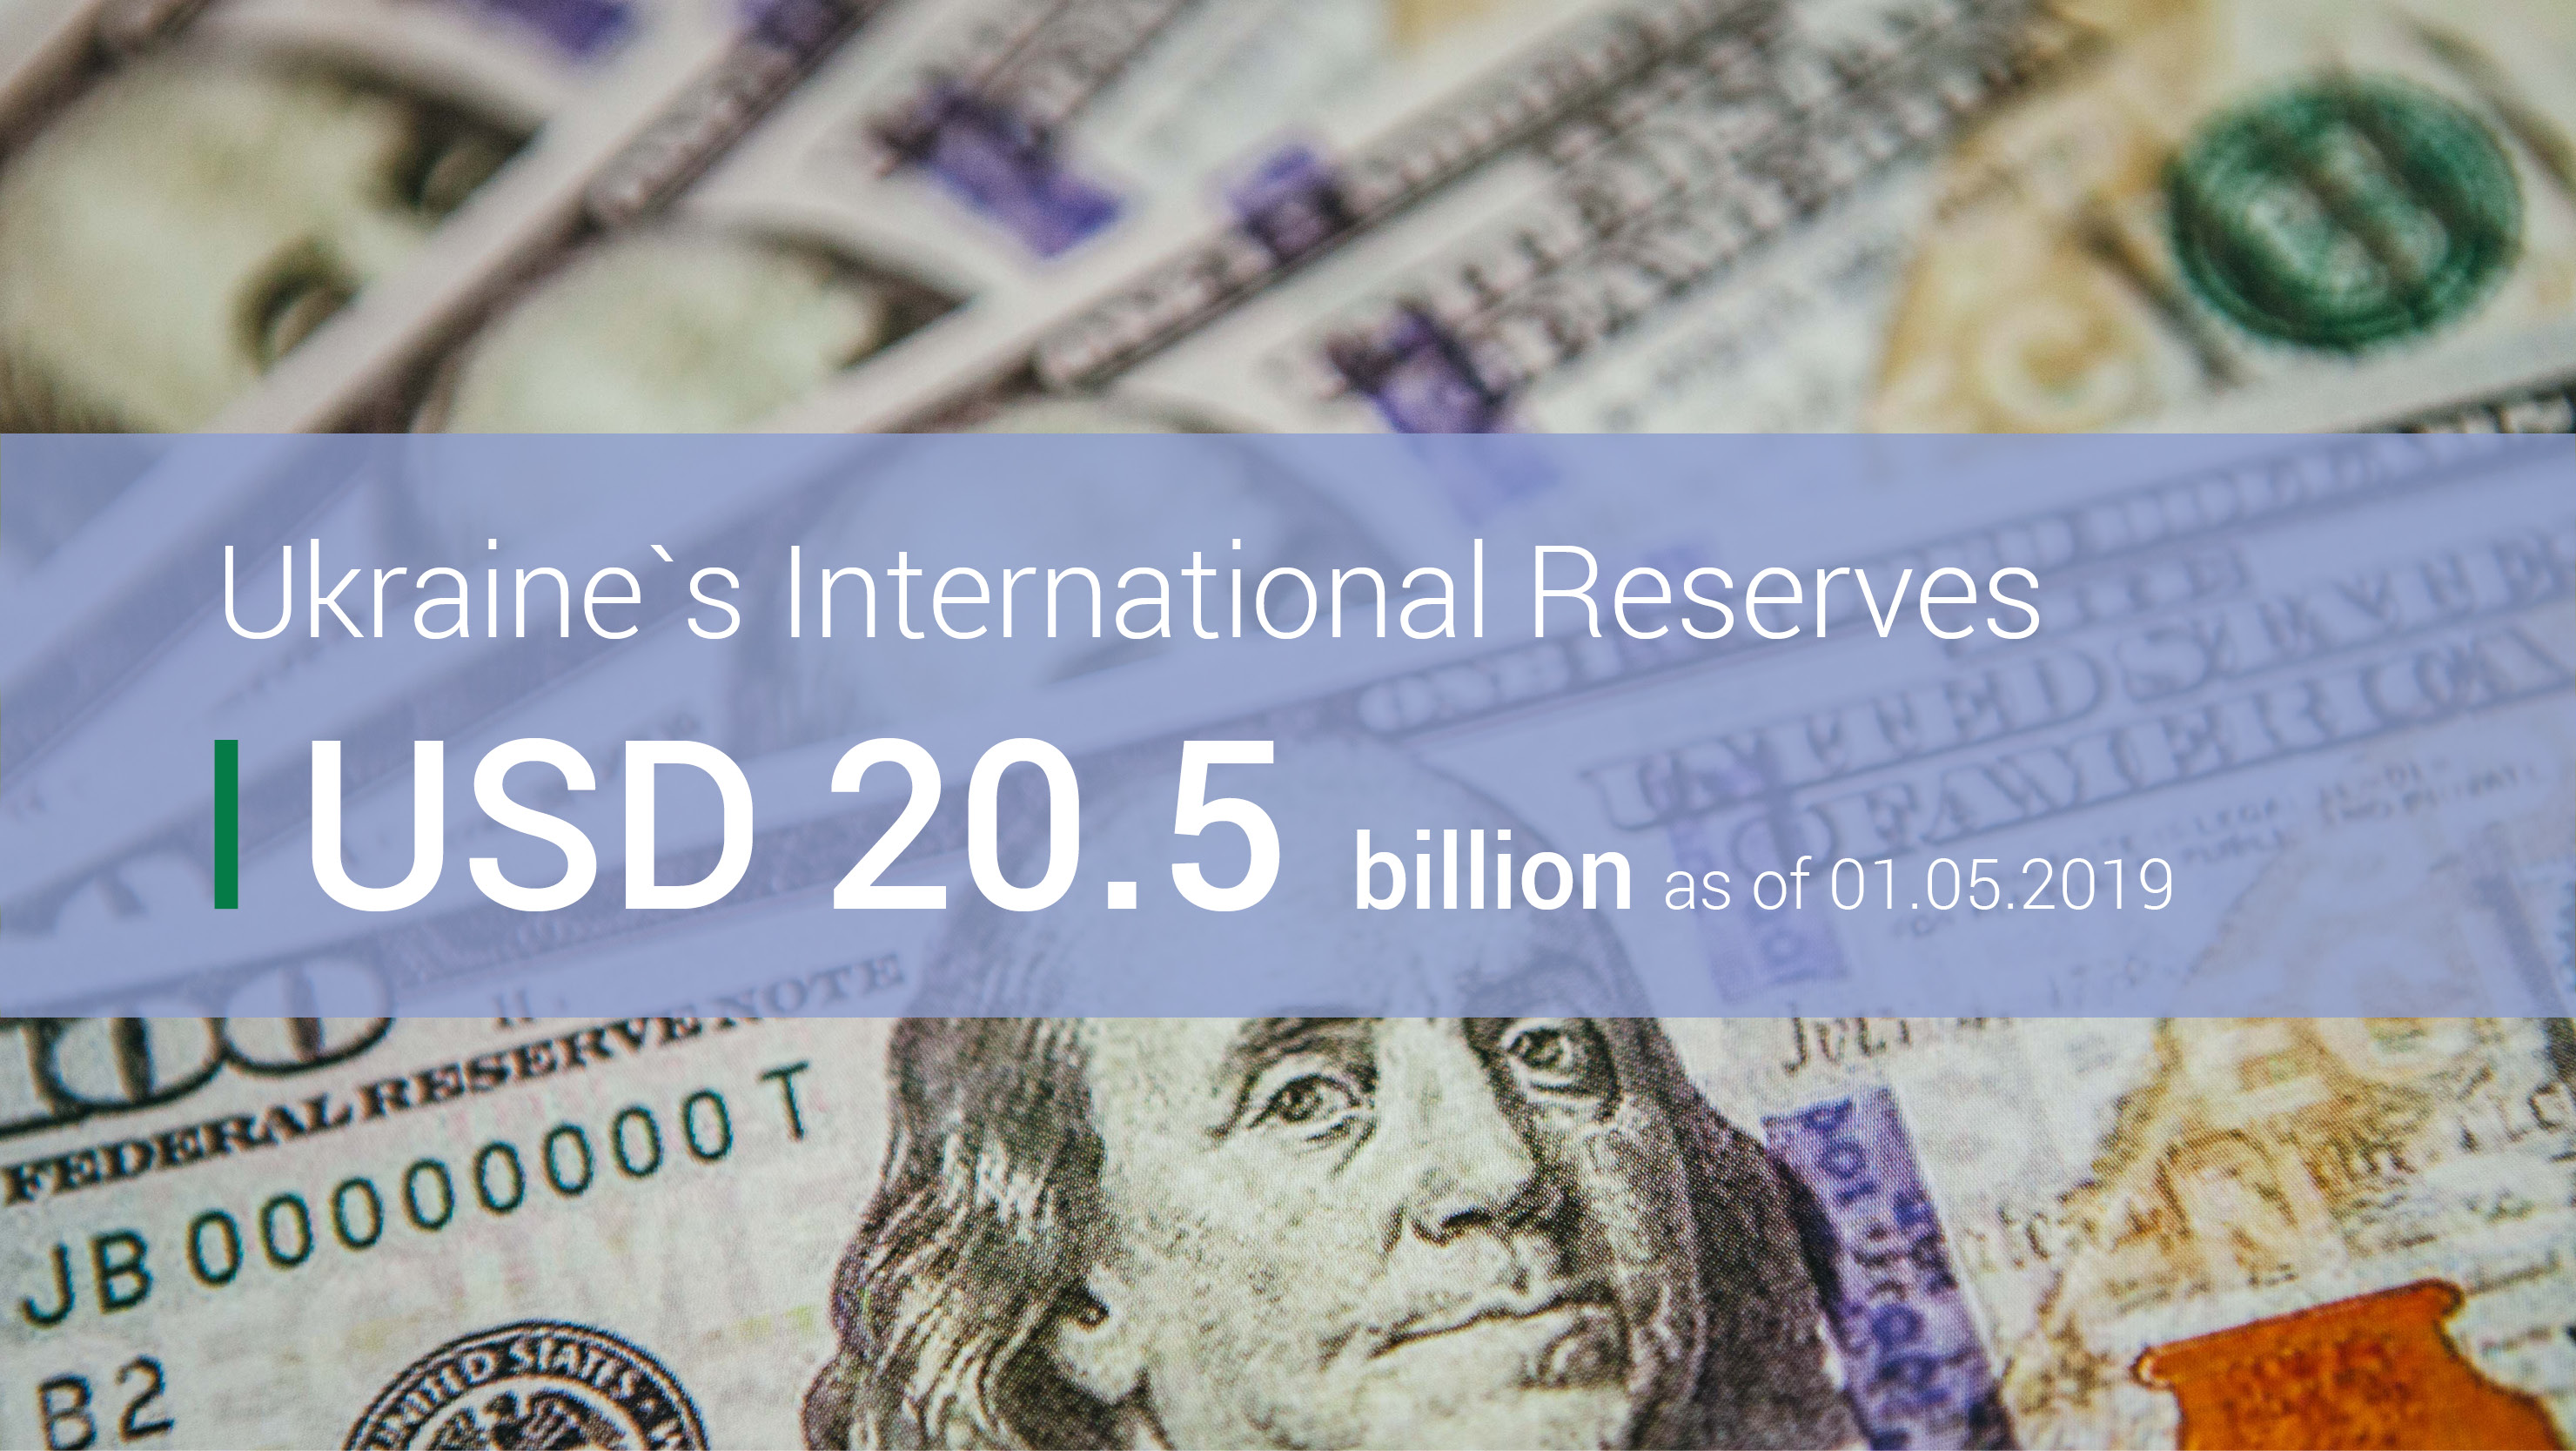 Ukraine’s International Reserves Reached USD 20.5 billion in April 2019